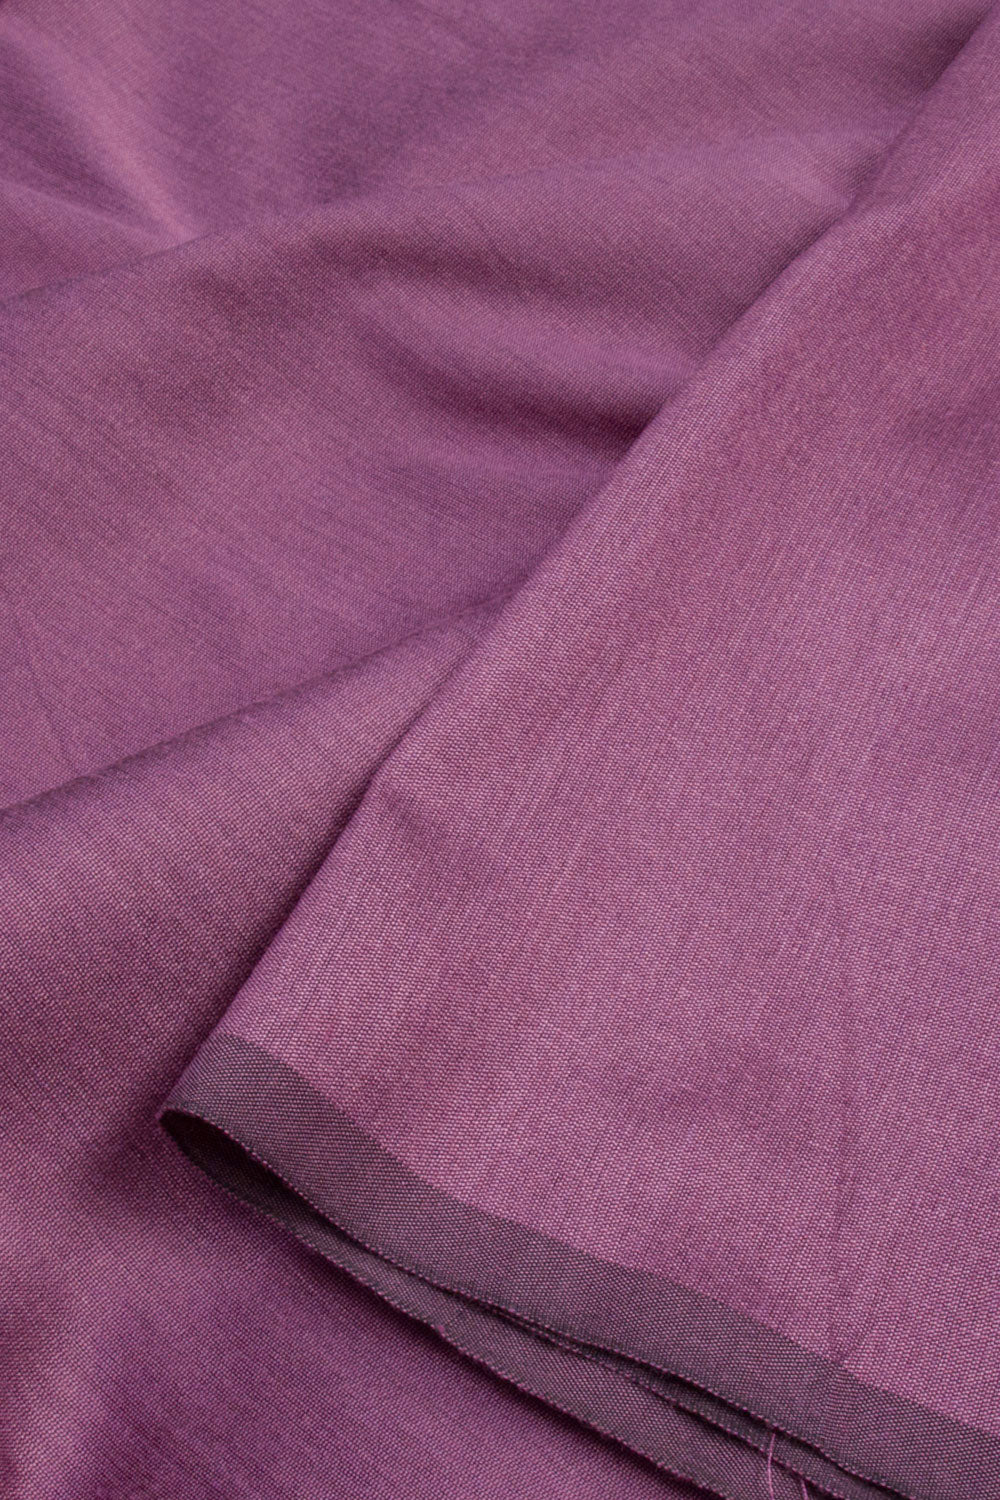 Brown Hand Block Printed Tussar Silk 3-Piece Salwar Suit Material 10061842